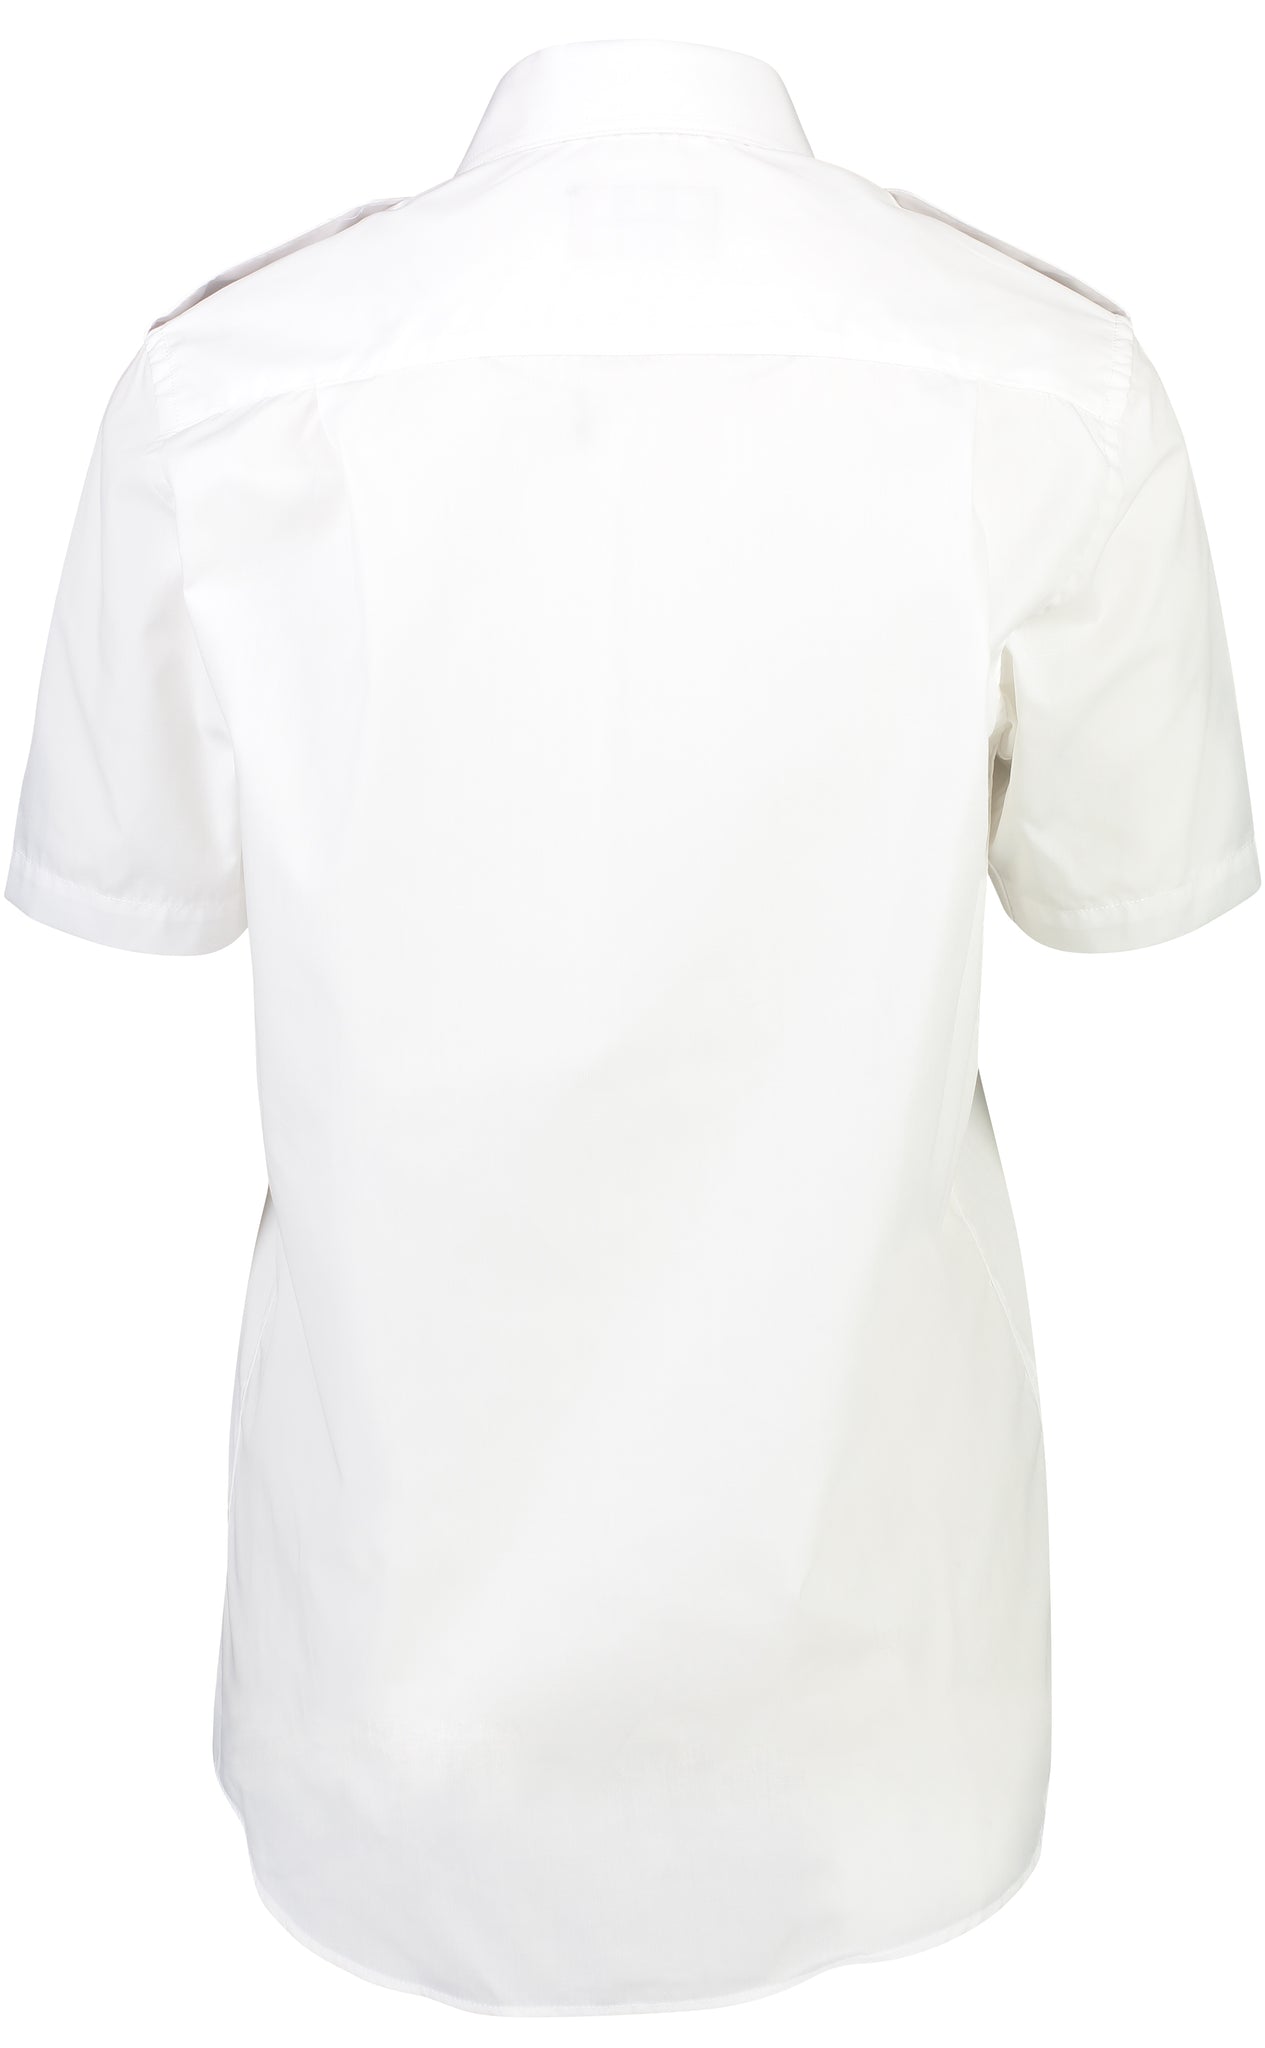 Mens Short Sleeve Pilot Dress Shirt White | Downunder Pilot Shop Australia